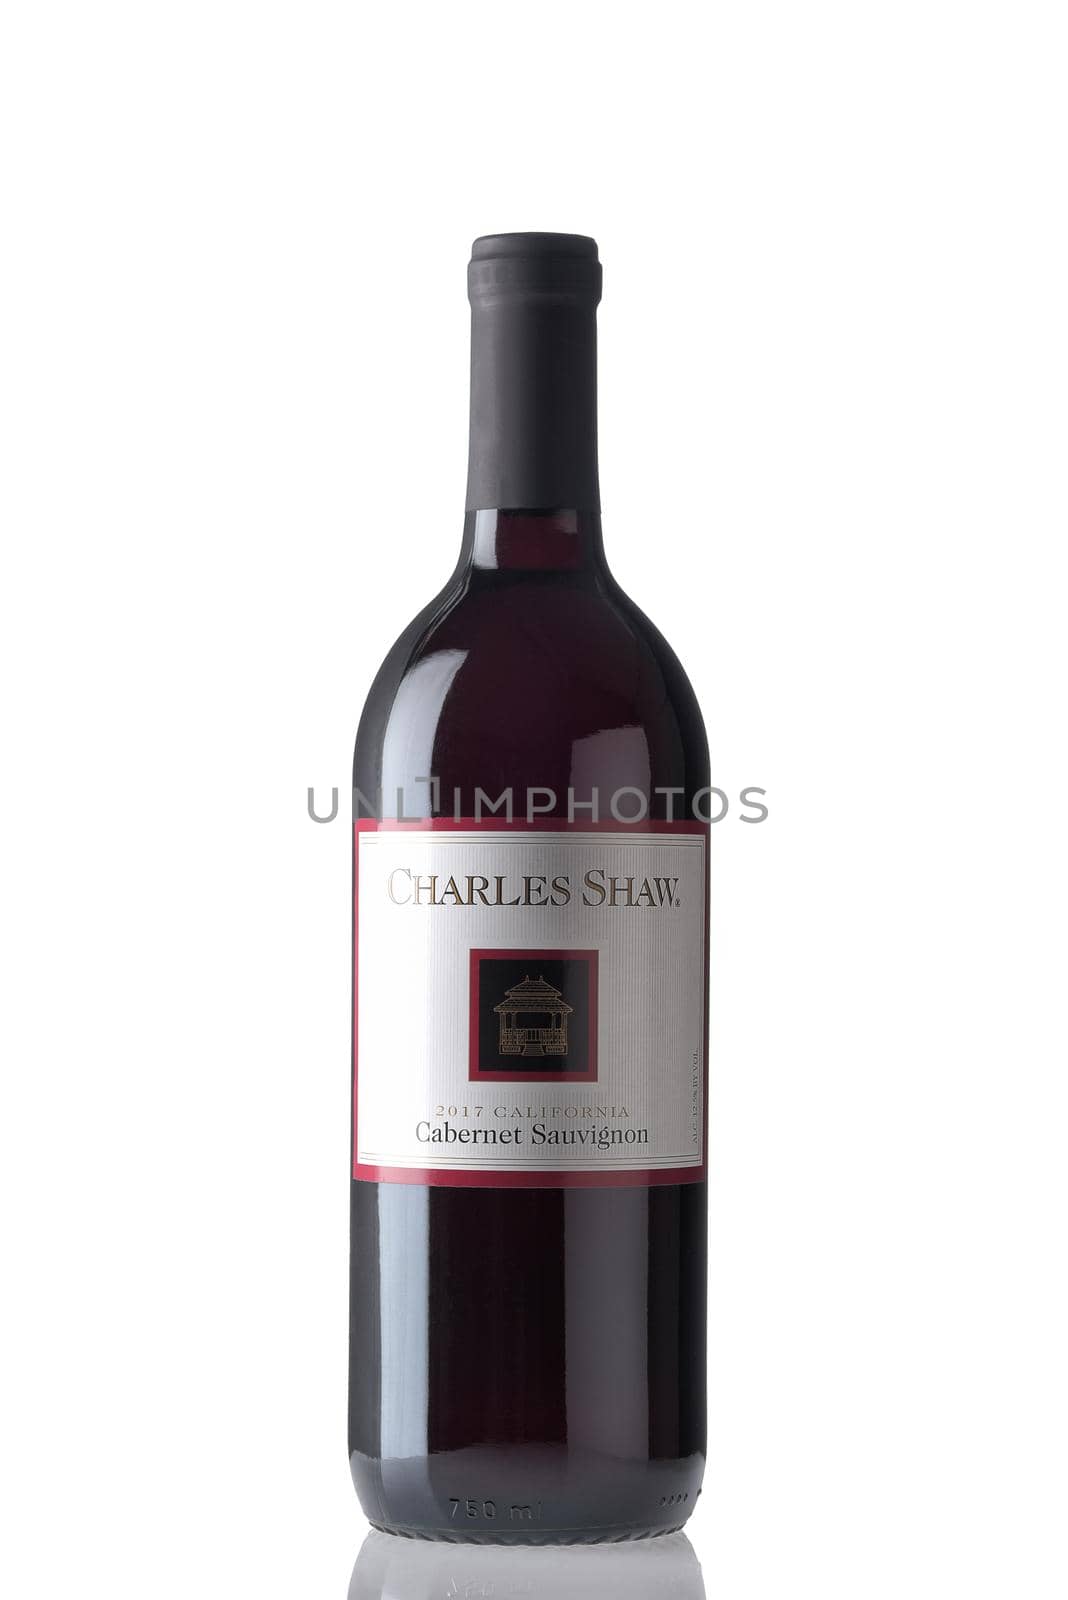 IRVINE, CALIFORNIA - 2 JUN 2021: A bottle of Charles Shaw Cabernet Sauvigon, Trader Joes private label bargain wine.